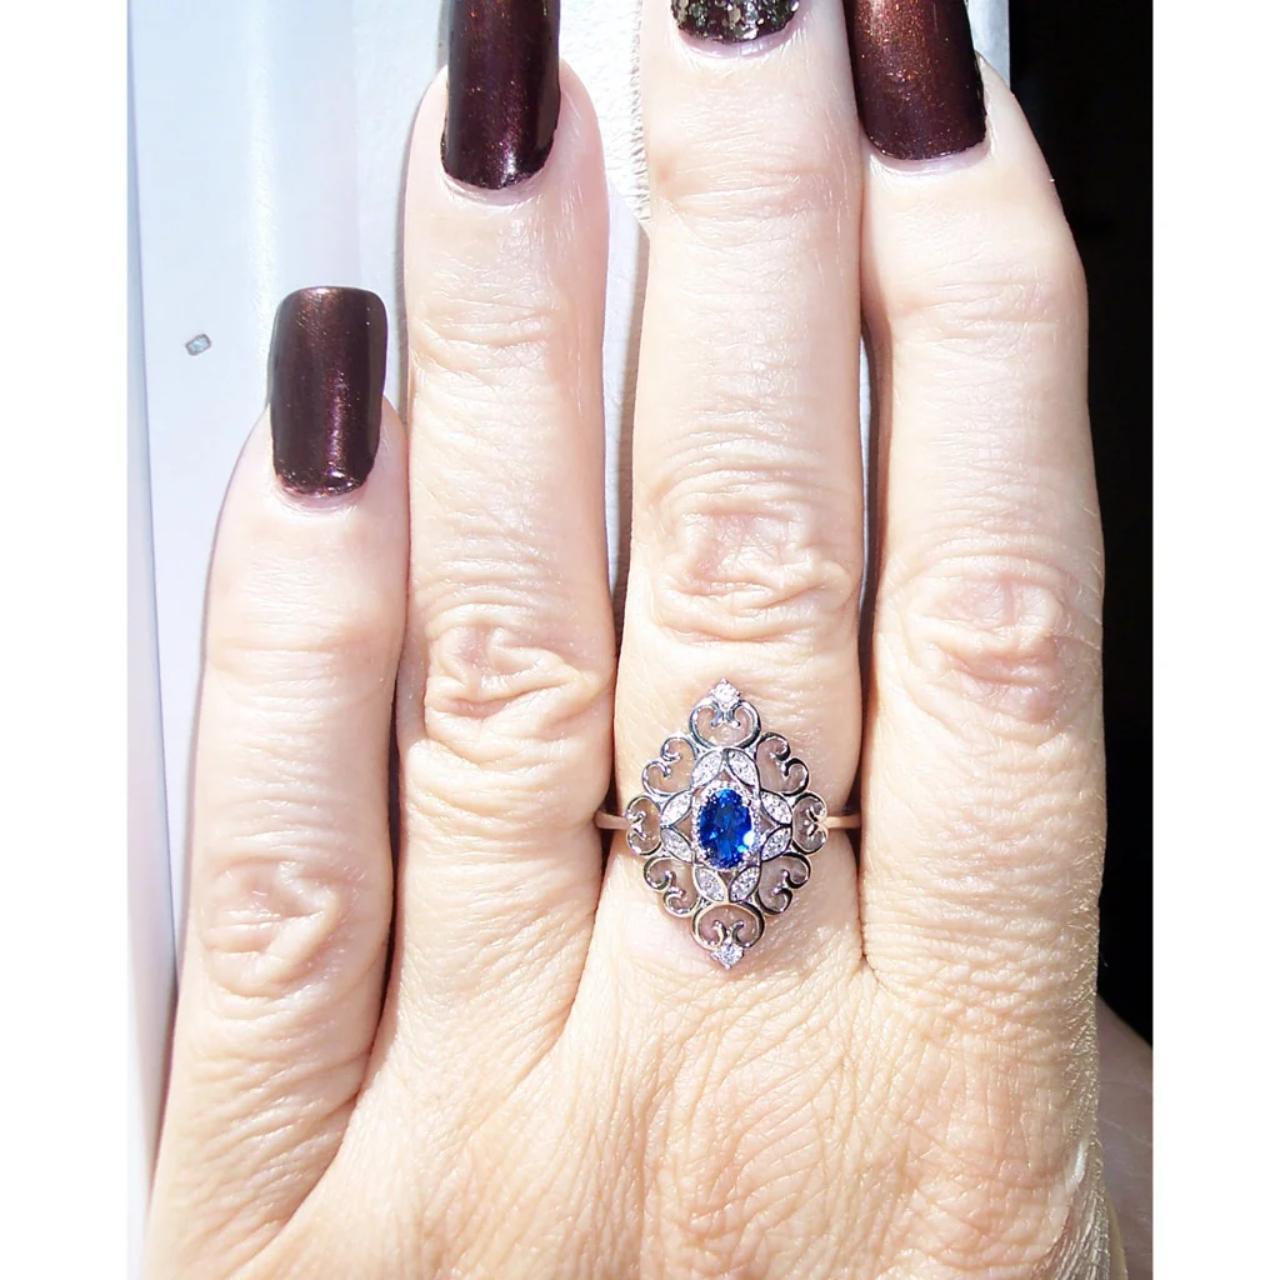 Blue Fire Opal Seven Stone Ring - Size L (6) - https://www.amandamay.co.uk